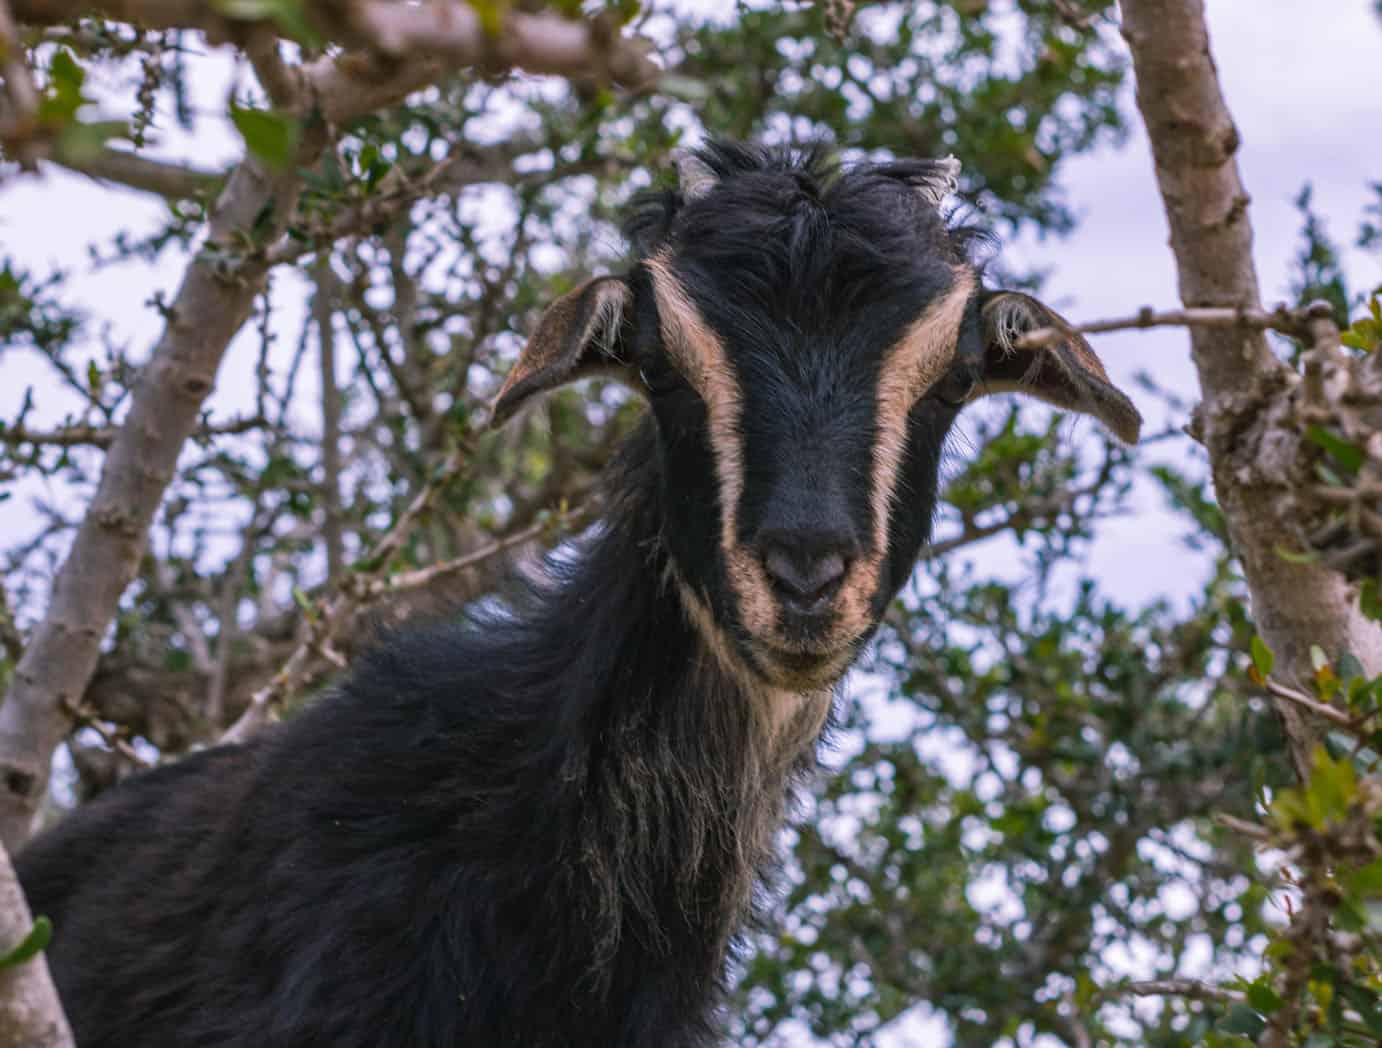 Morocco has tree climbing goats!